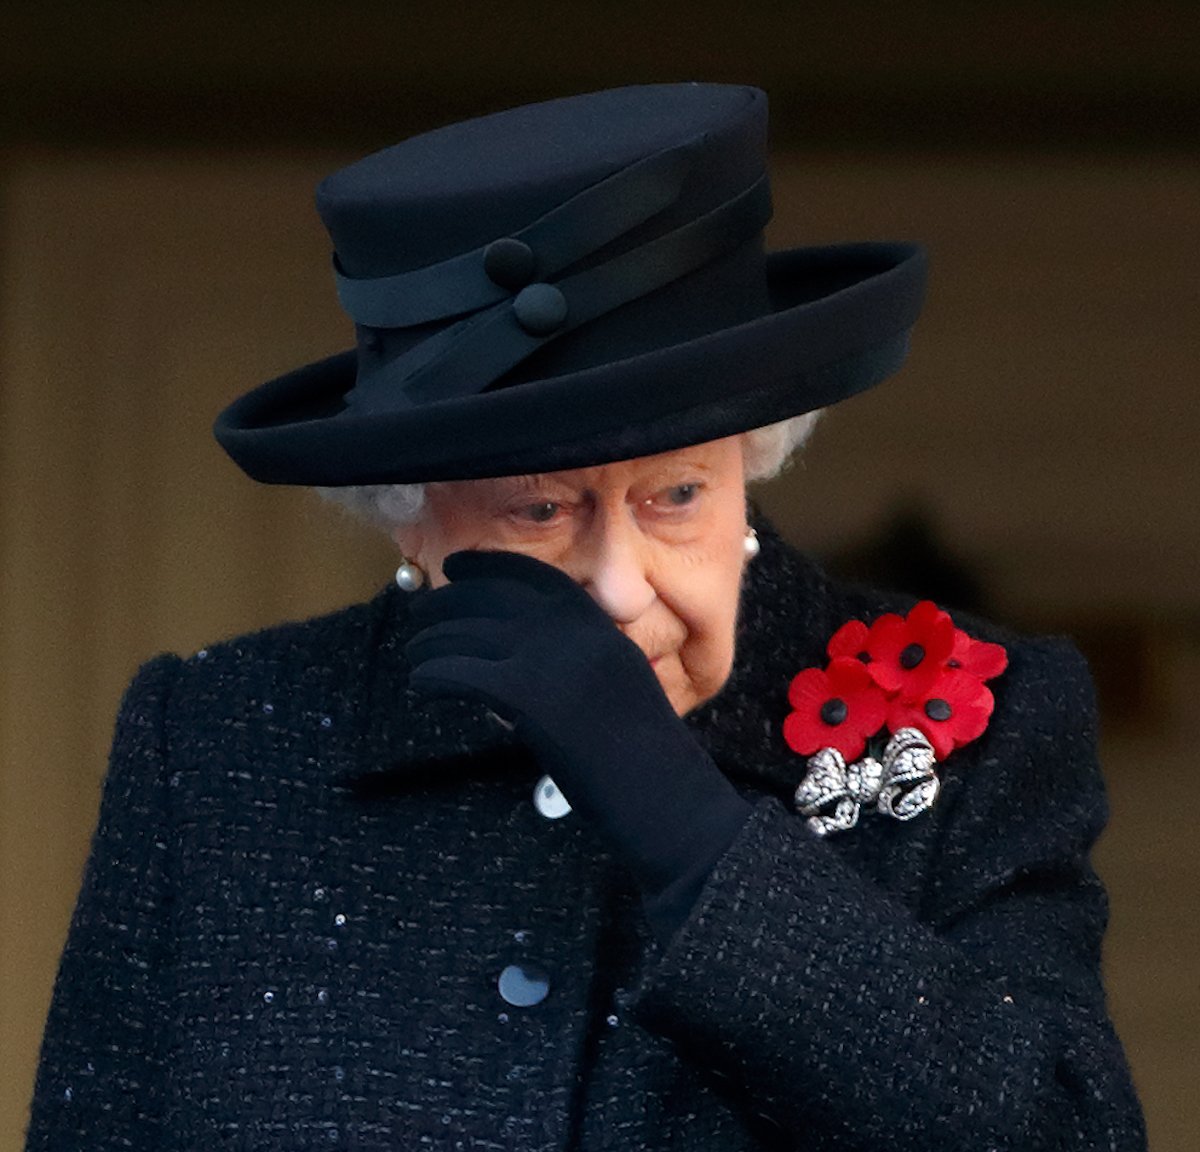 ueen Elizabeth II attends the annual Remembrance Sunday service